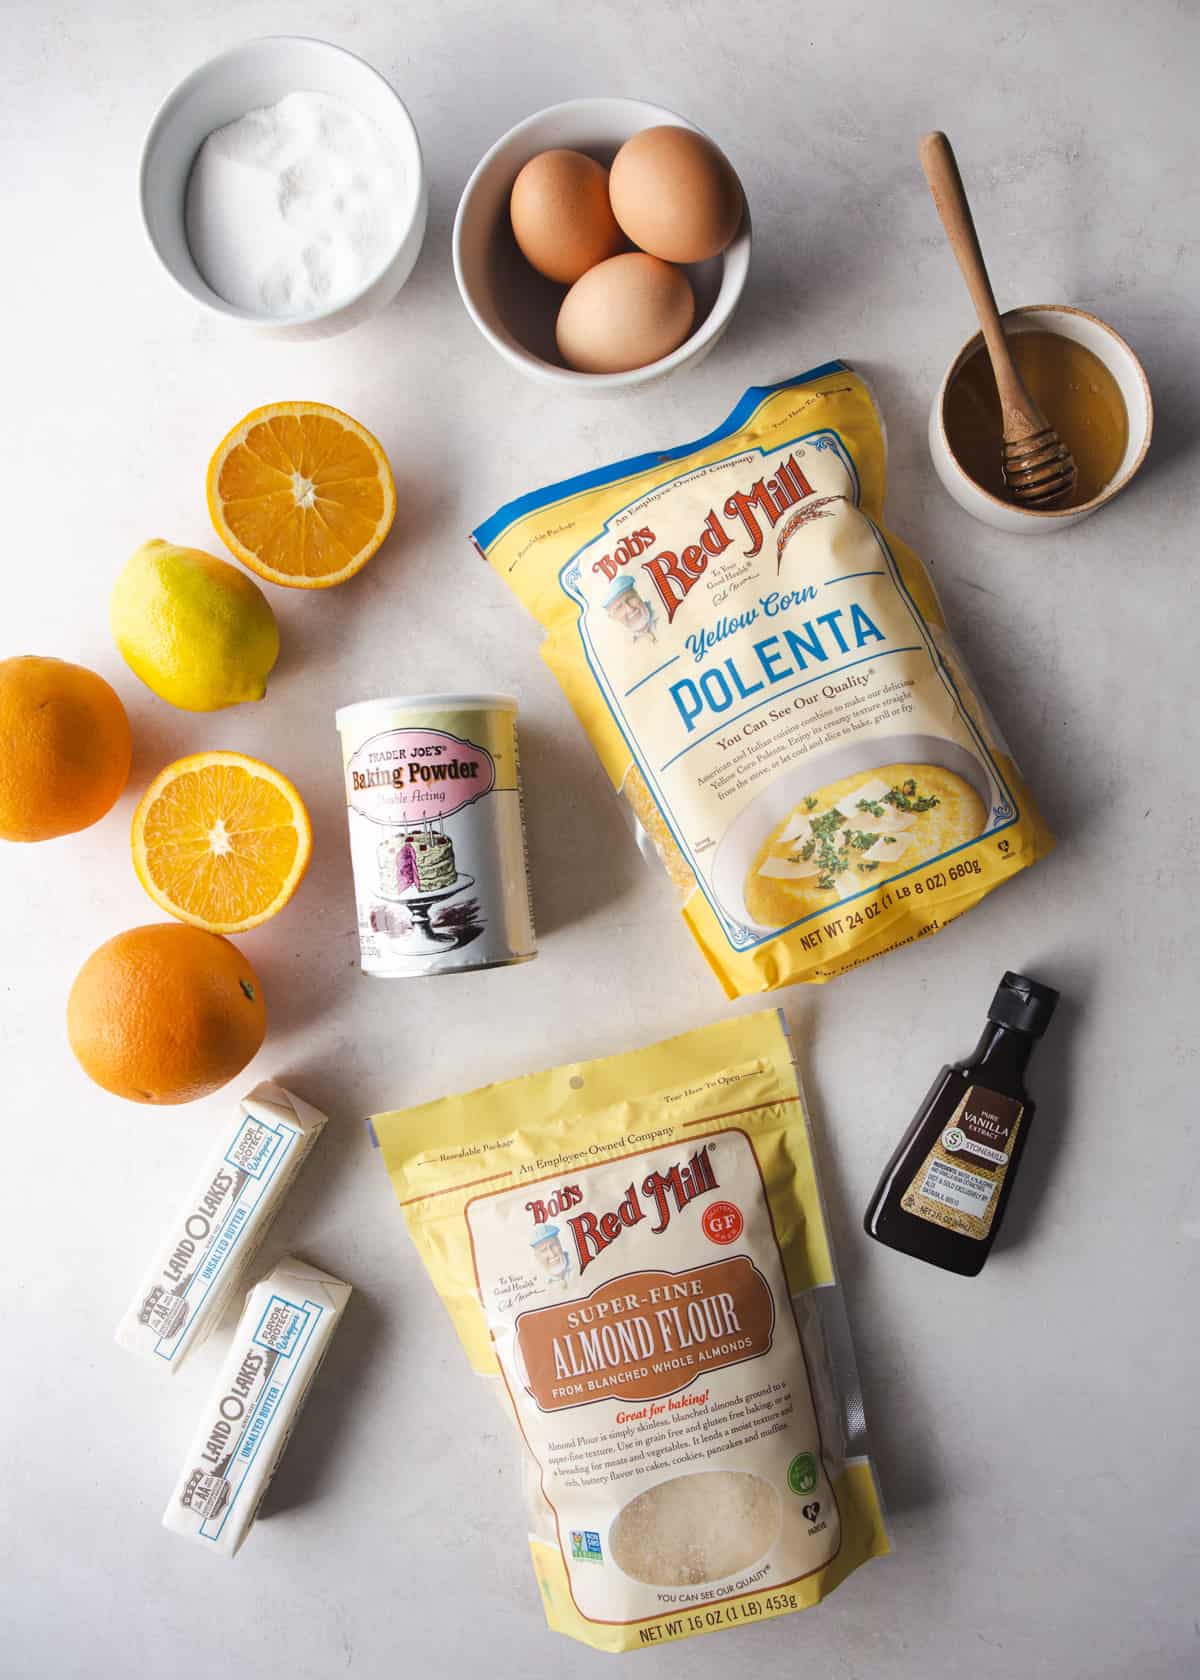 ingredients for honey citrus polenta cake on a white countertop